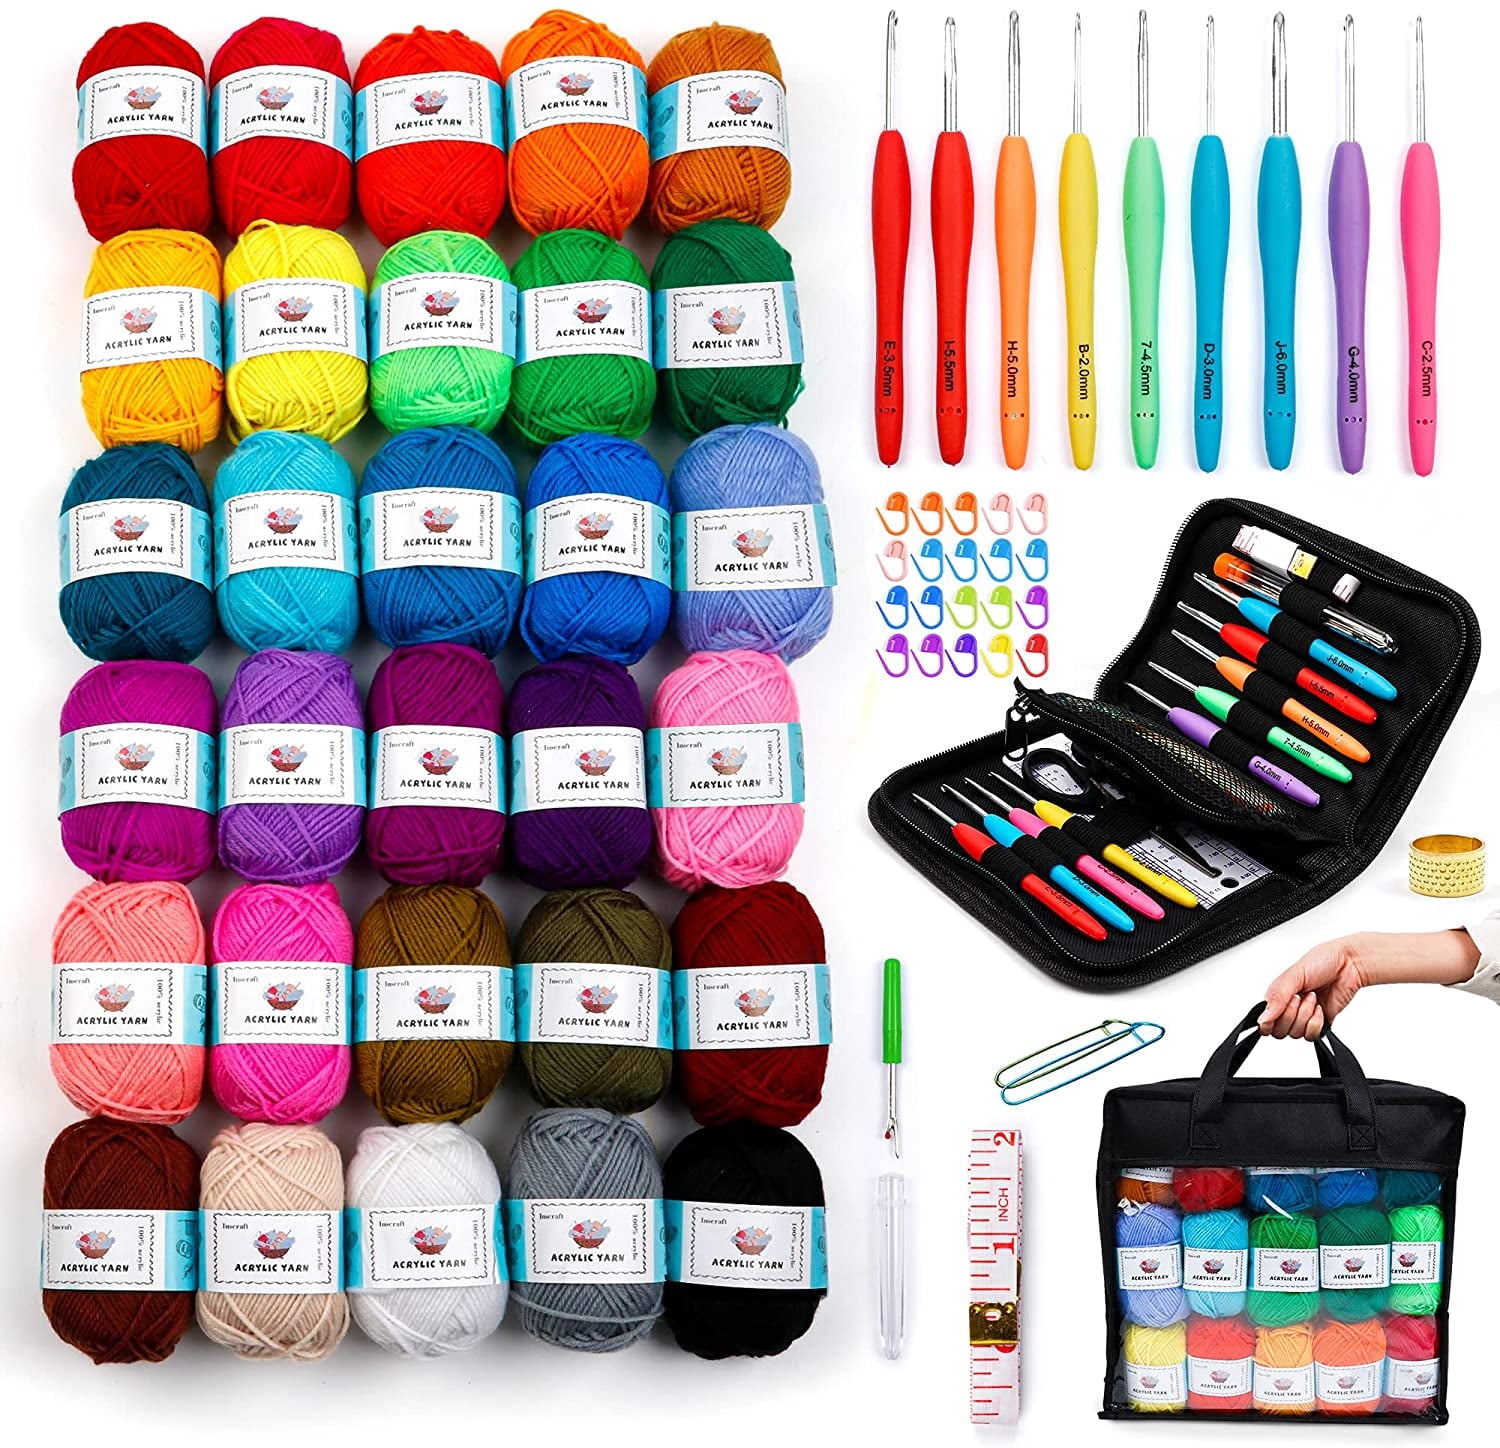 103 PCS Crochet Kit with Crochet Hooks Yarn Set, Bundle Includes